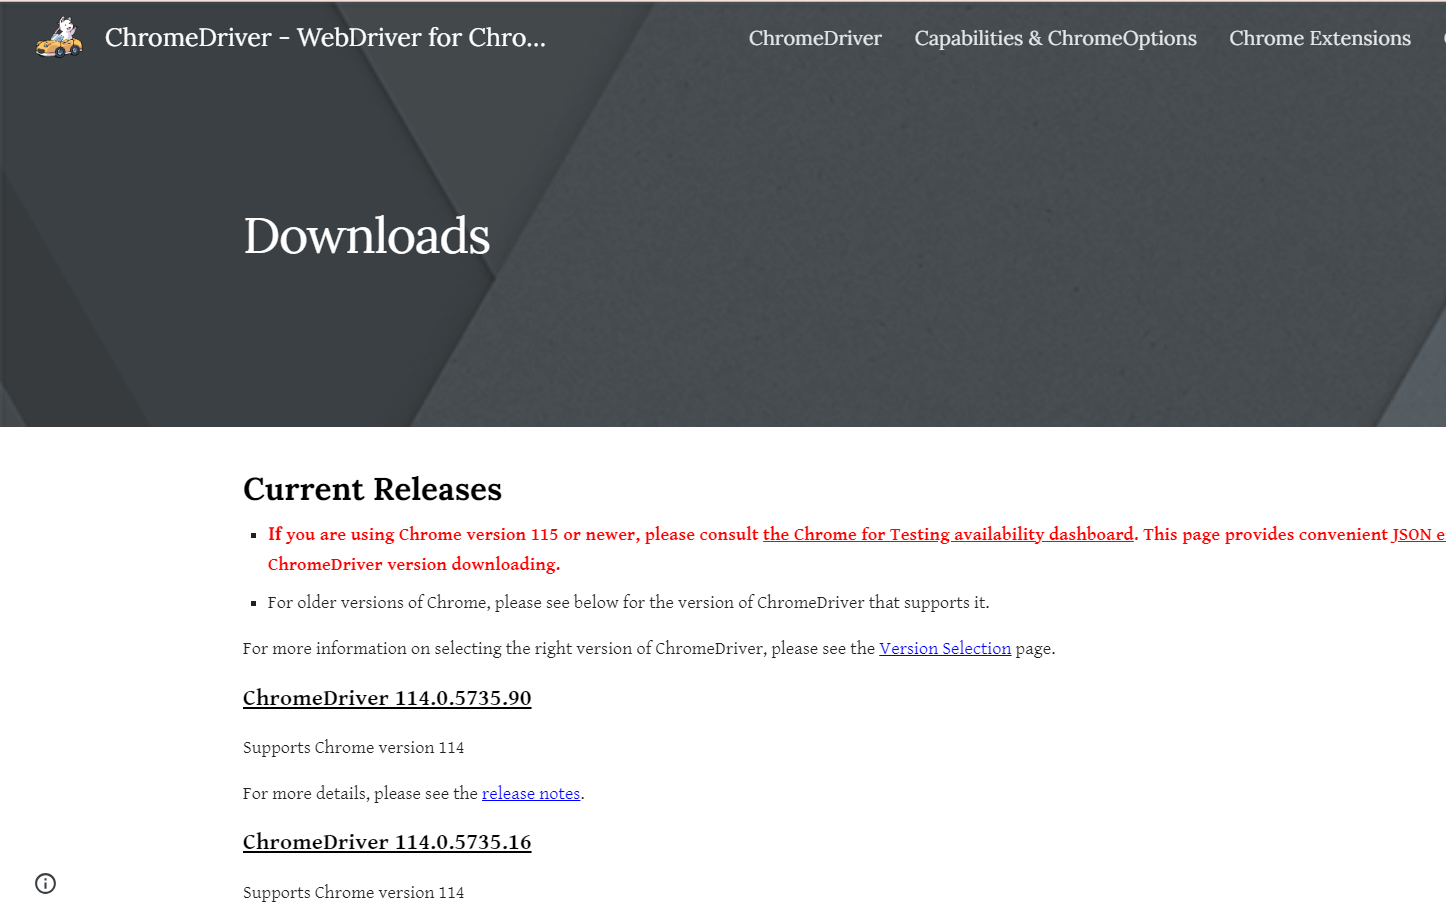 ChromeDriver latest release image